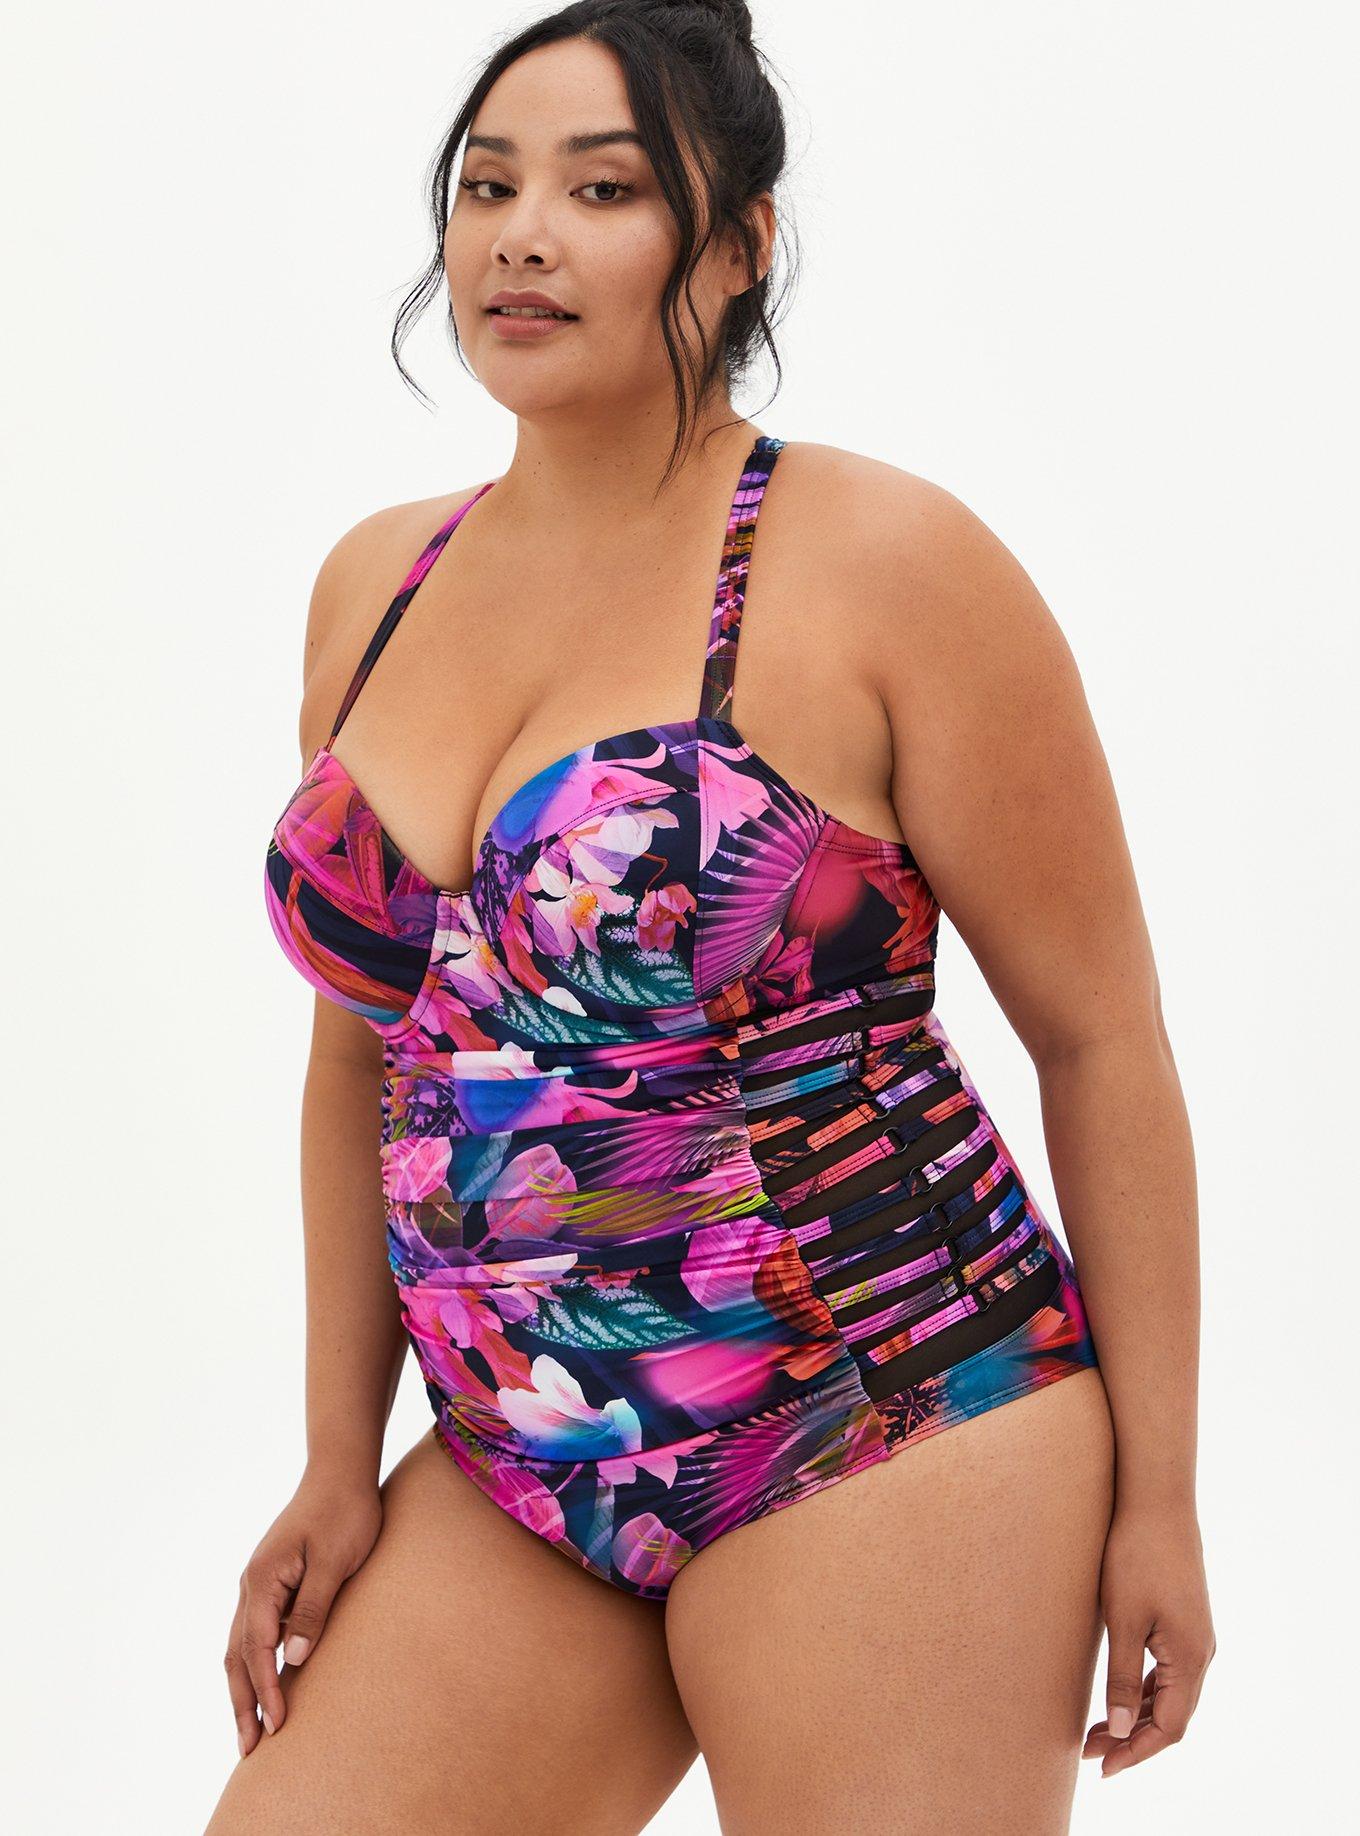 Swimsuits for All Women's Plus Size Ruler Bra Sized Underwire Bikini Top -  44 G, Boho